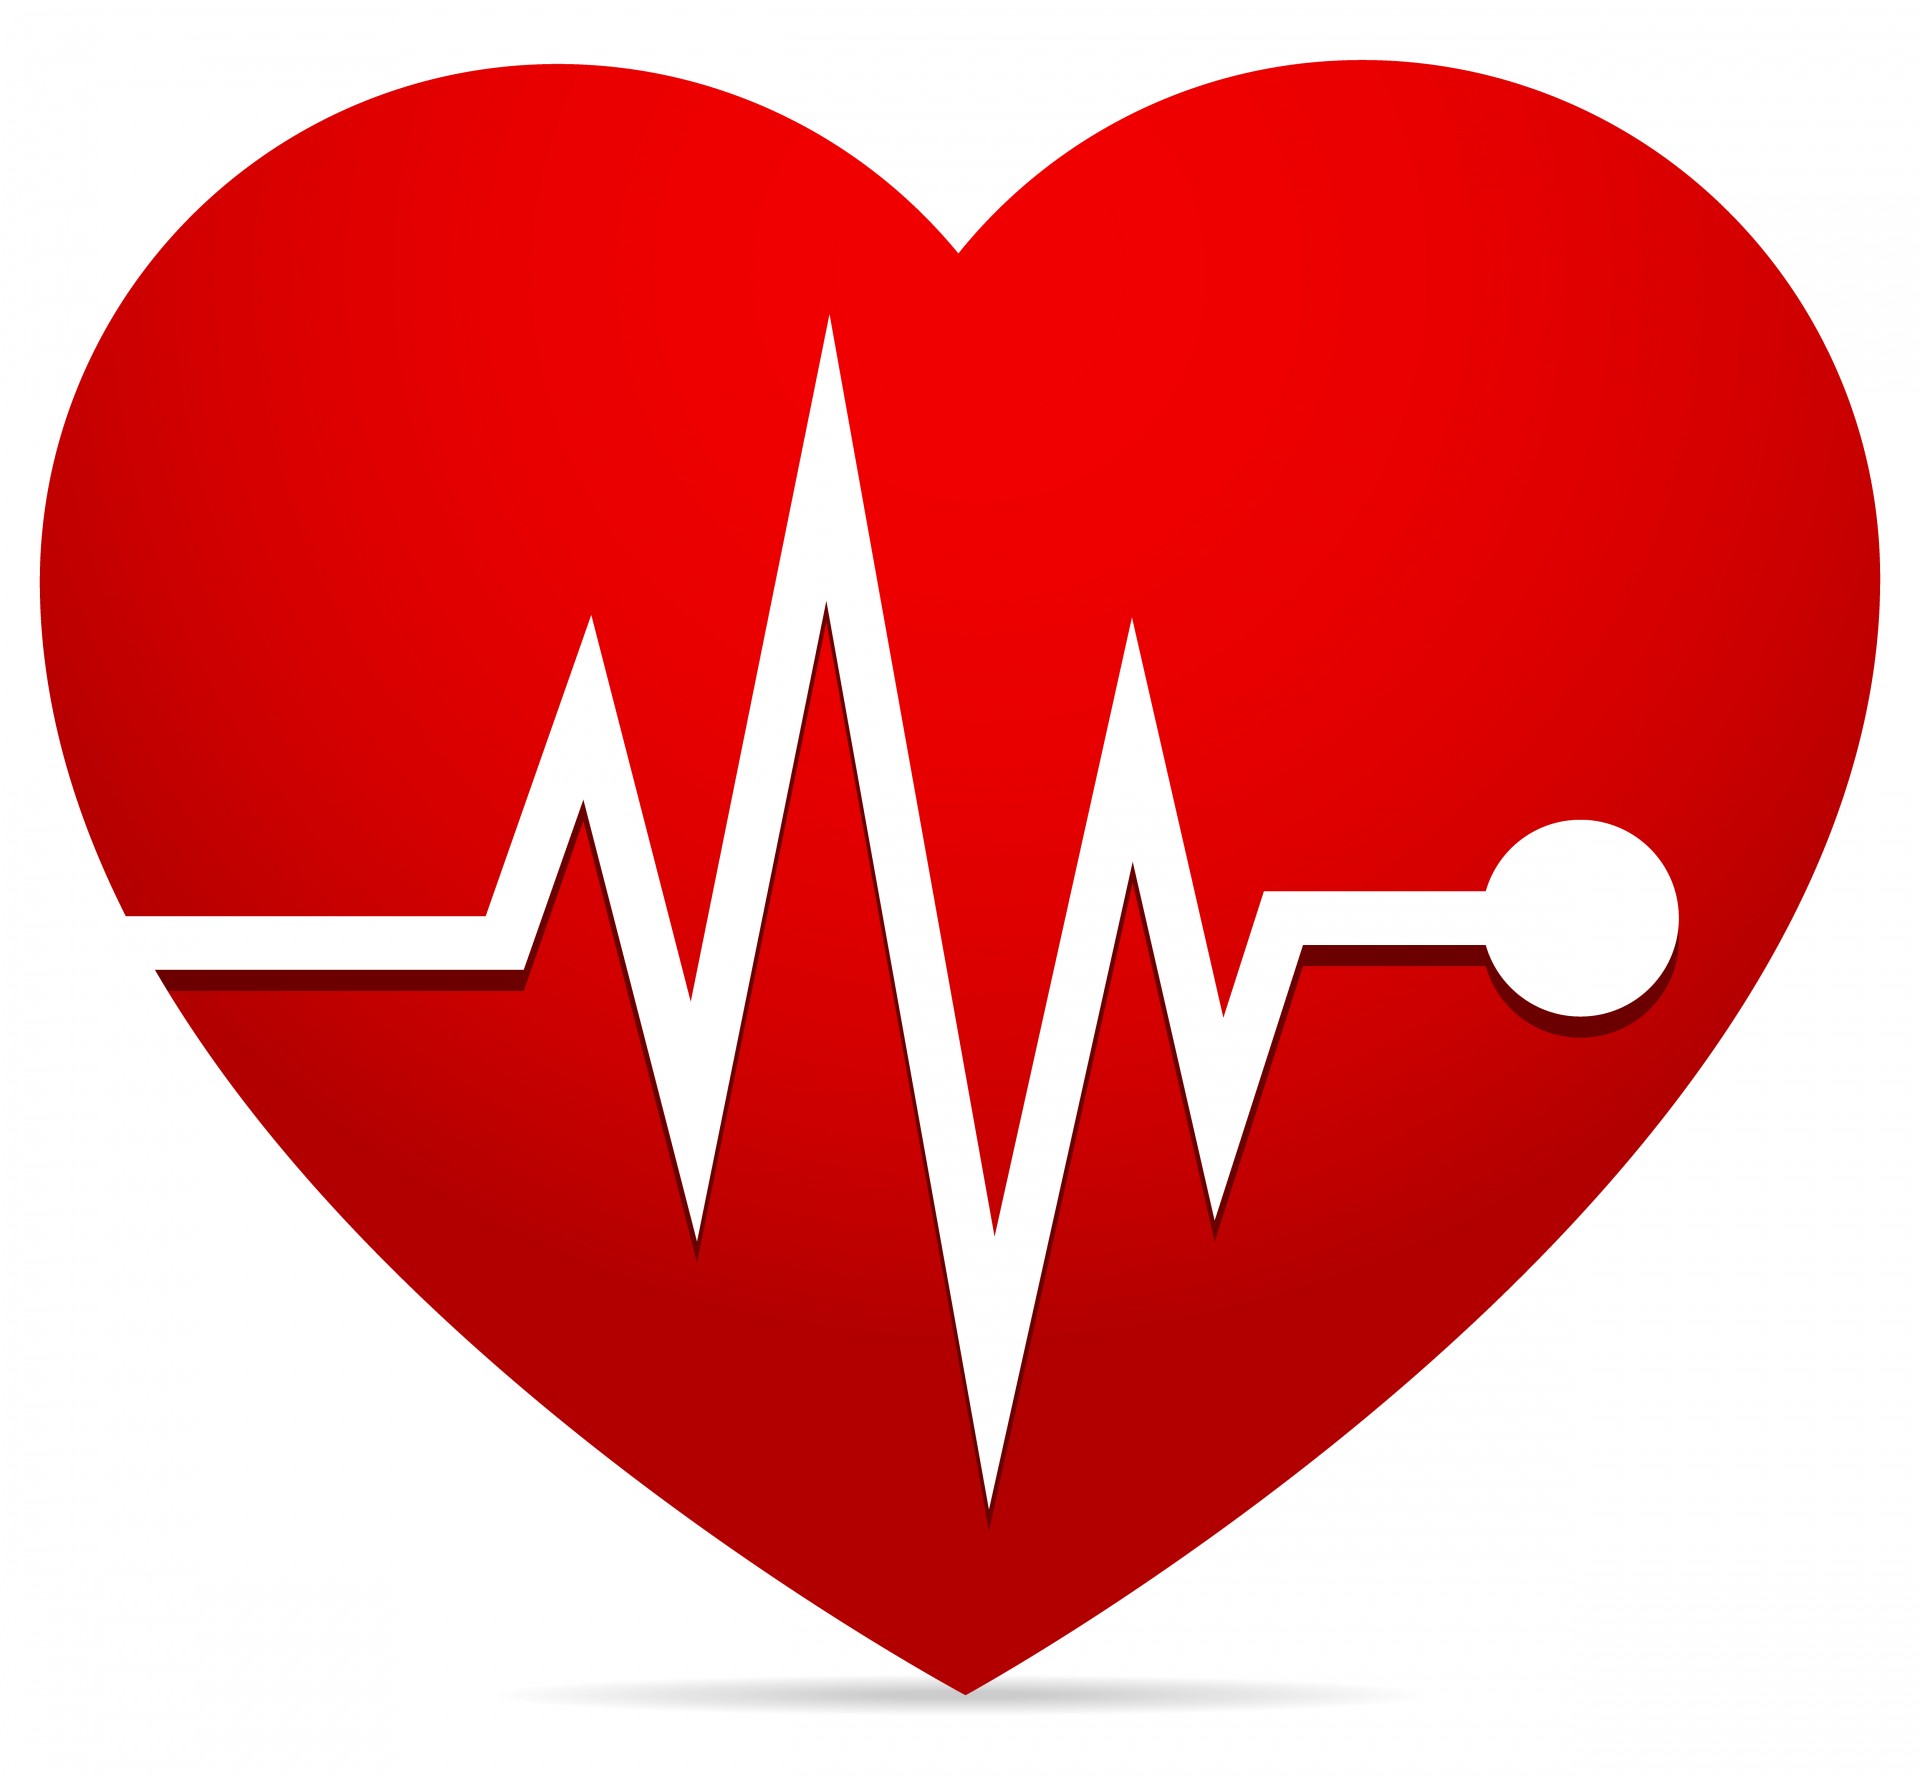 Heart rate clip art - ClipartFox